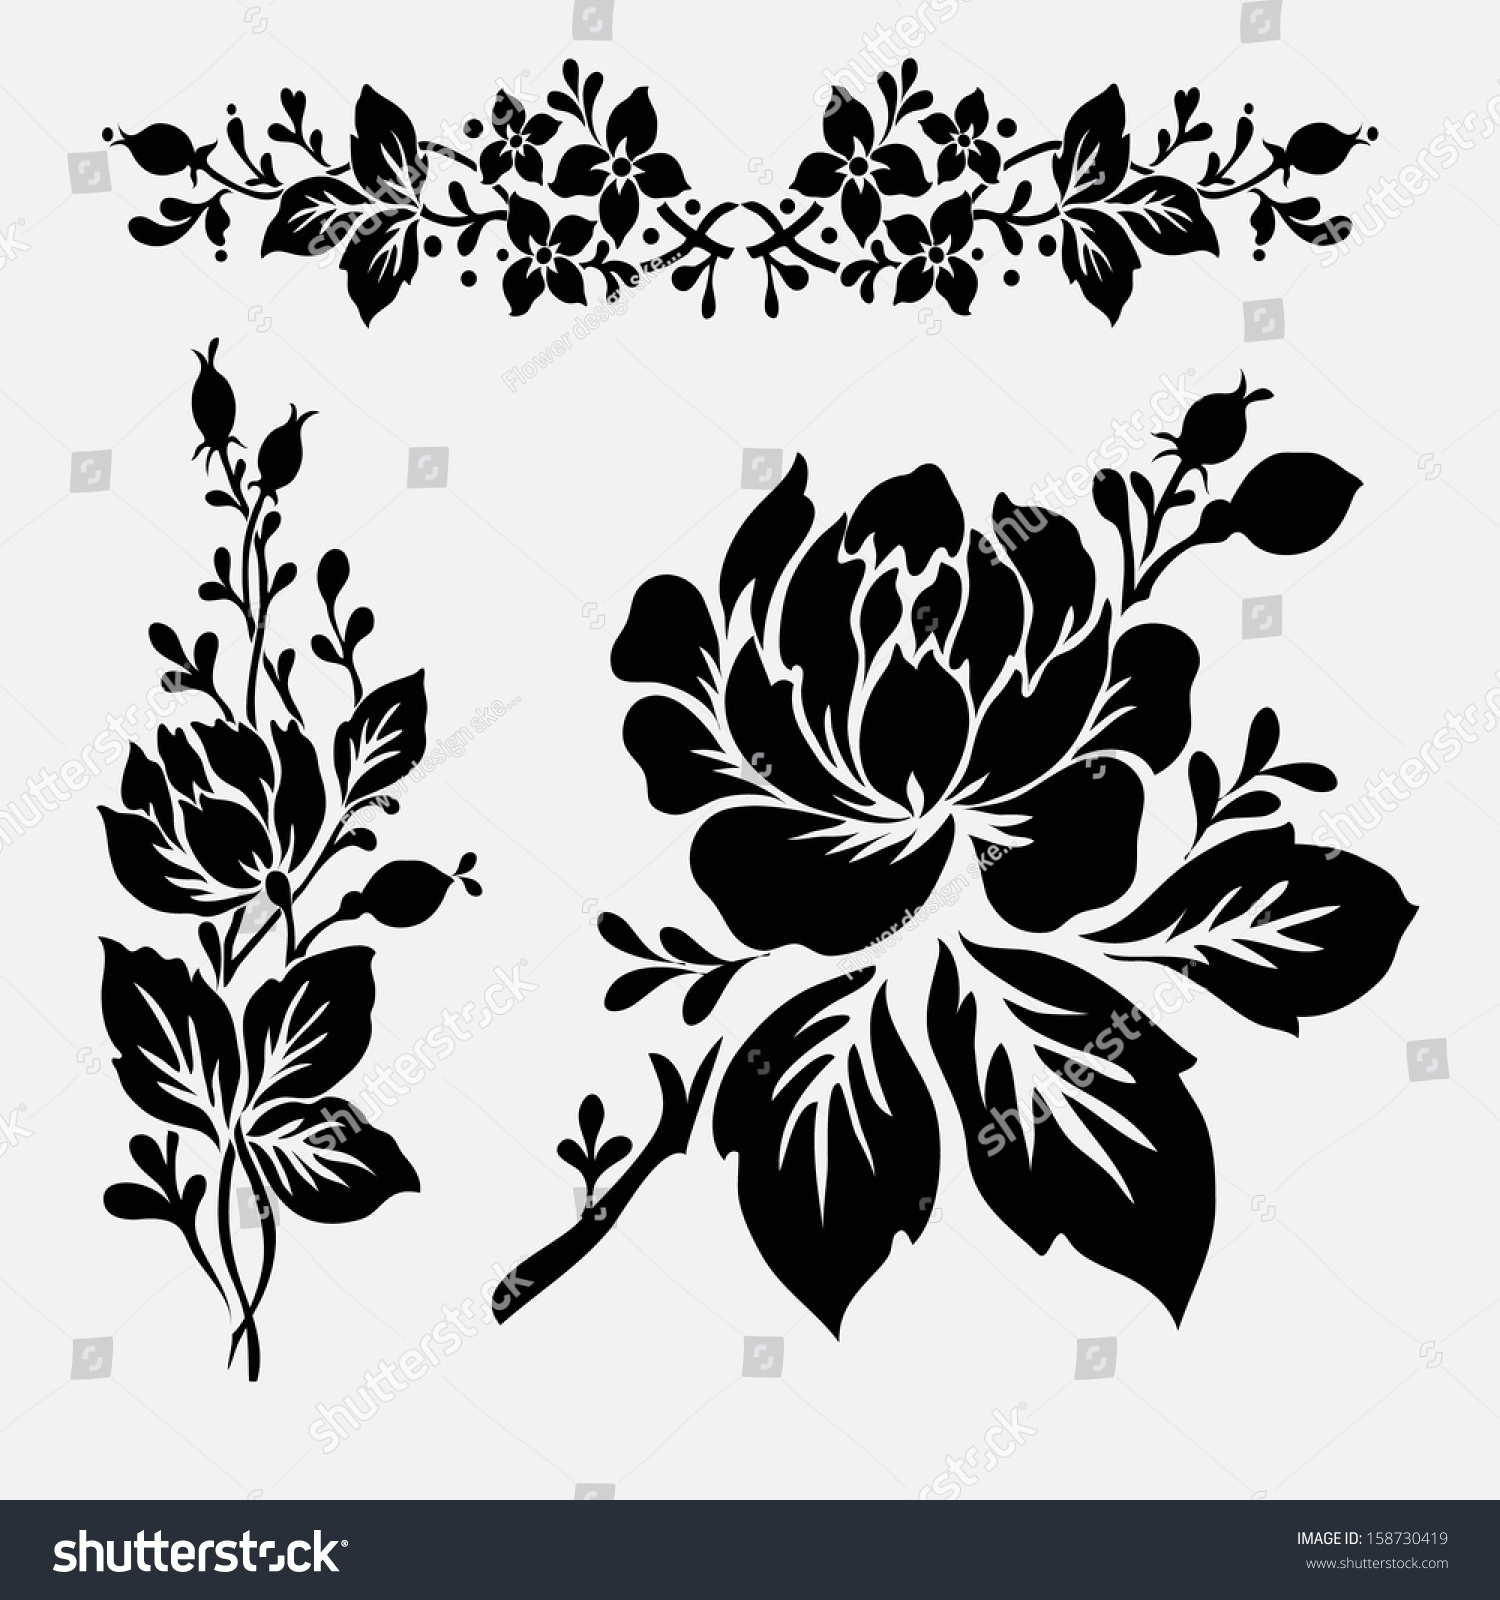 Rose Motif Flower Design Elements Vector Royalty Free Stock Vector 158730419 Avopix Com